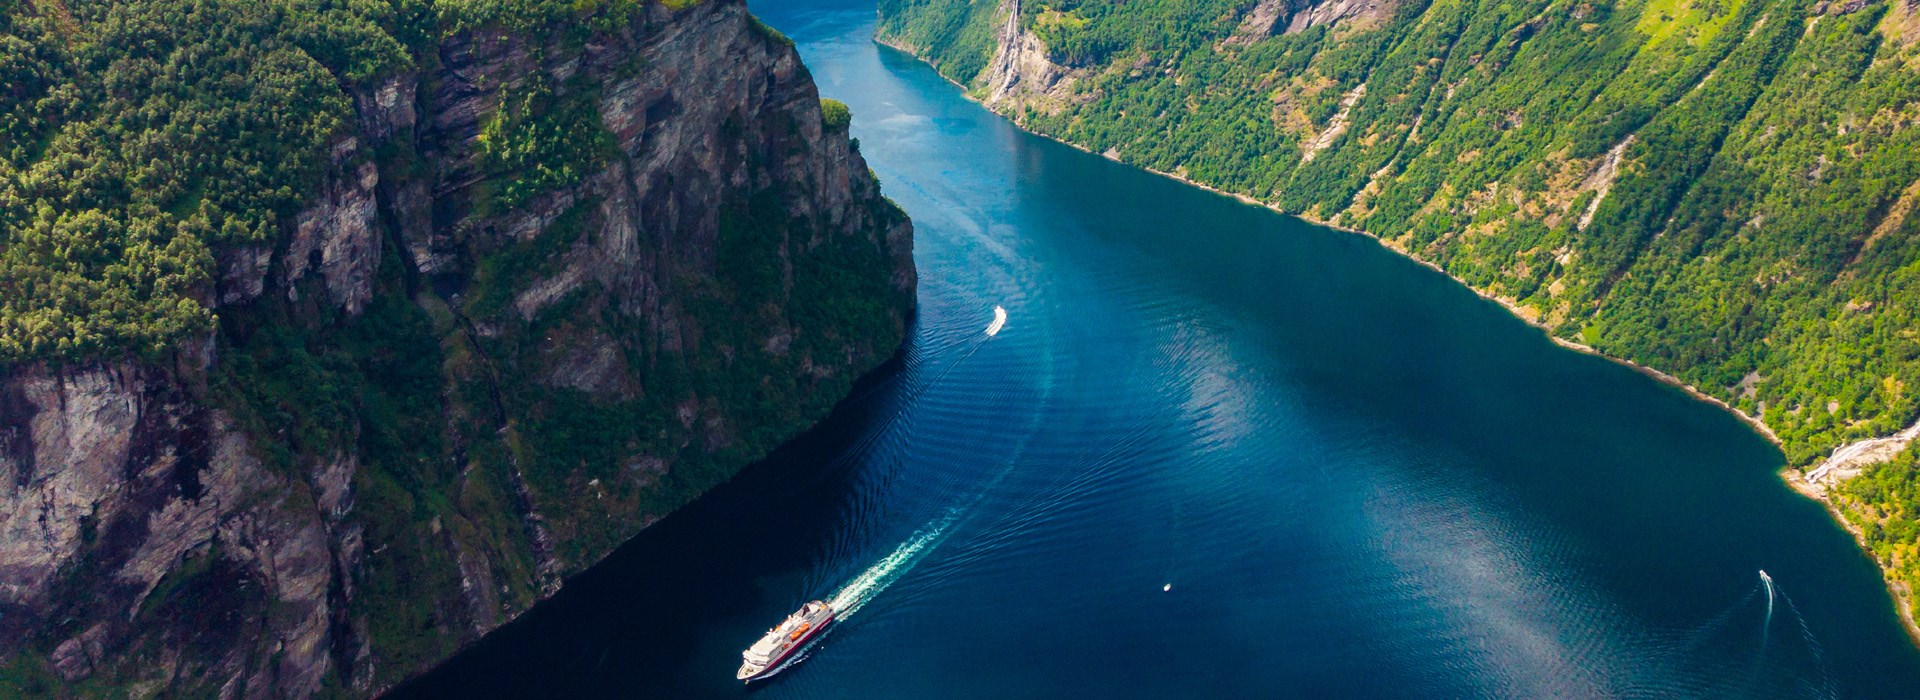 Visiter Le fjord de Geiranger - Norvège